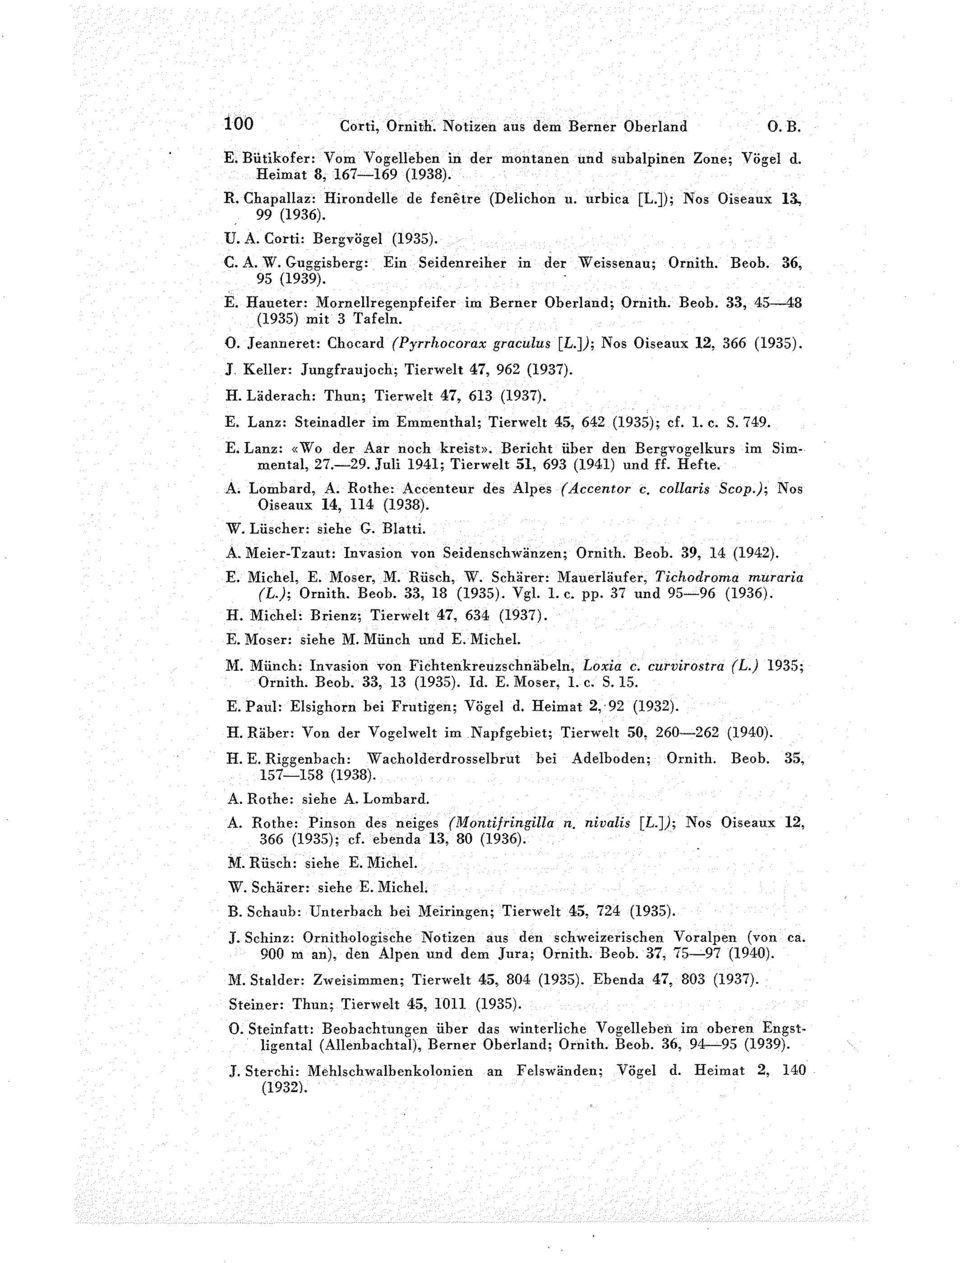 36, 95 (1939). E. Haueter: Mornellregenpfeifer im Berner Oberland; Ornith. Beob. 33, 45--48 (1935) mit 3 Tafeln. O. Jeanneret: Chocard (Pyrrhocorax graculus [L.]); Nos Oiseaux 12, 366 (1935). J. Keller: Jungfraujoch; Tierwelt 47, 962 (1937).